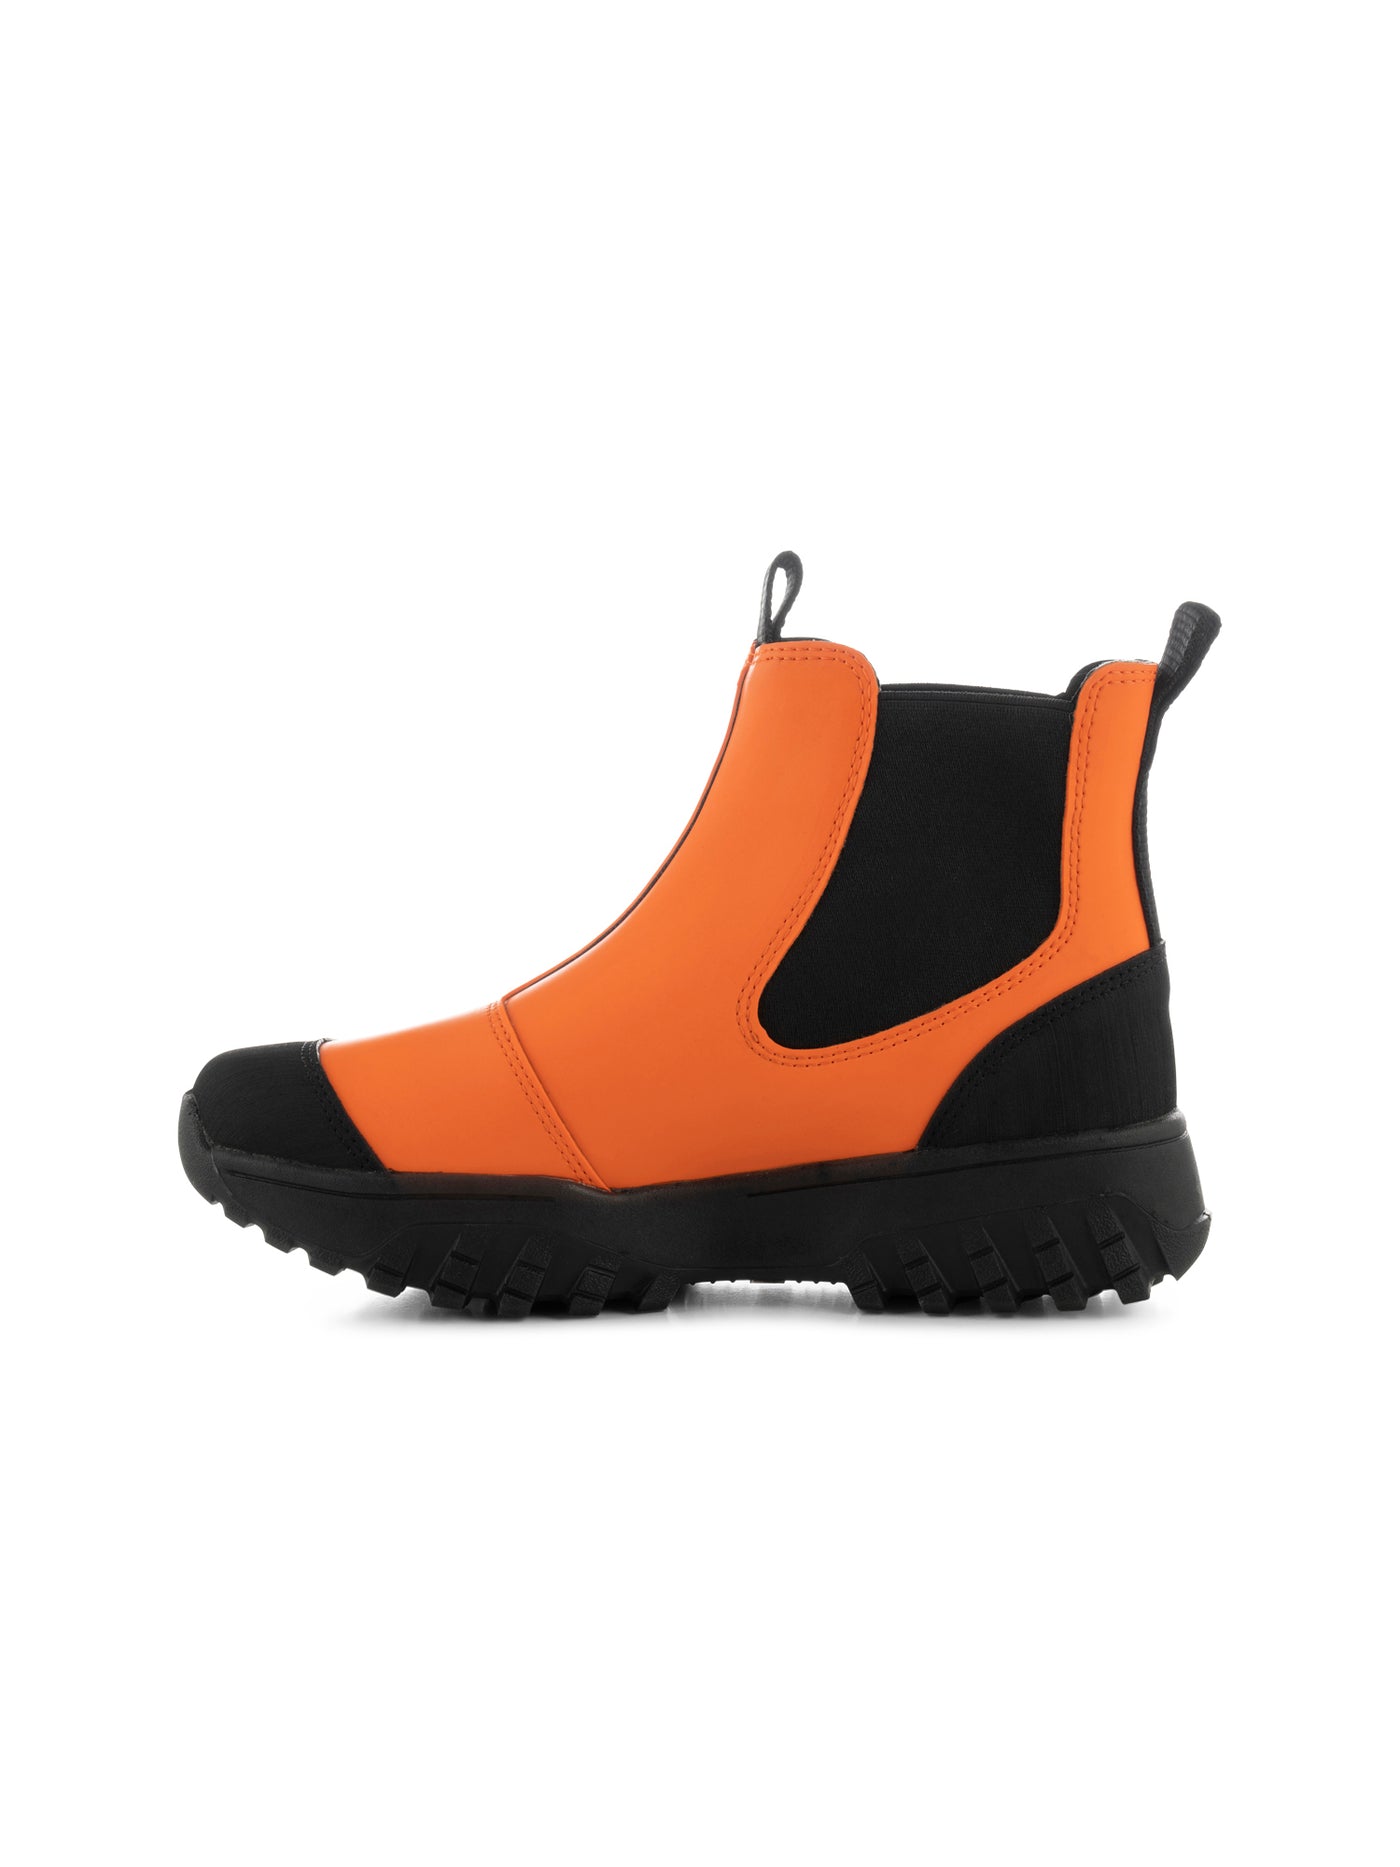 Waterproof boot in pumpkin.